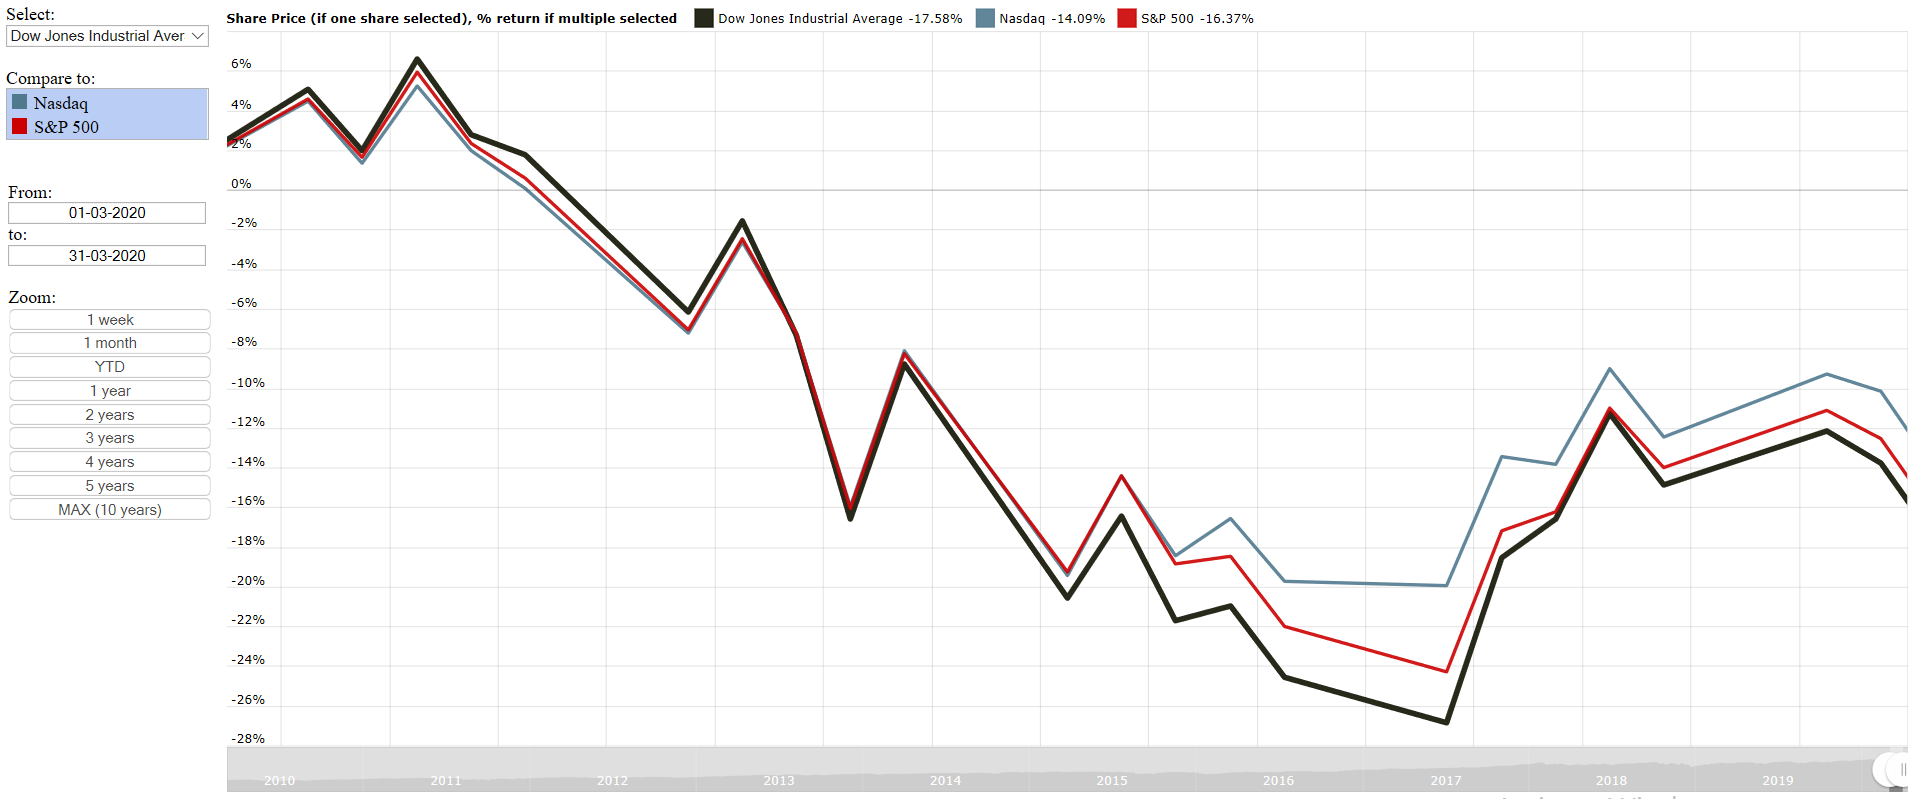 Dow Jones Industrial Average (DJIA) vs Nasdaq vs S&P 500 for March 2020